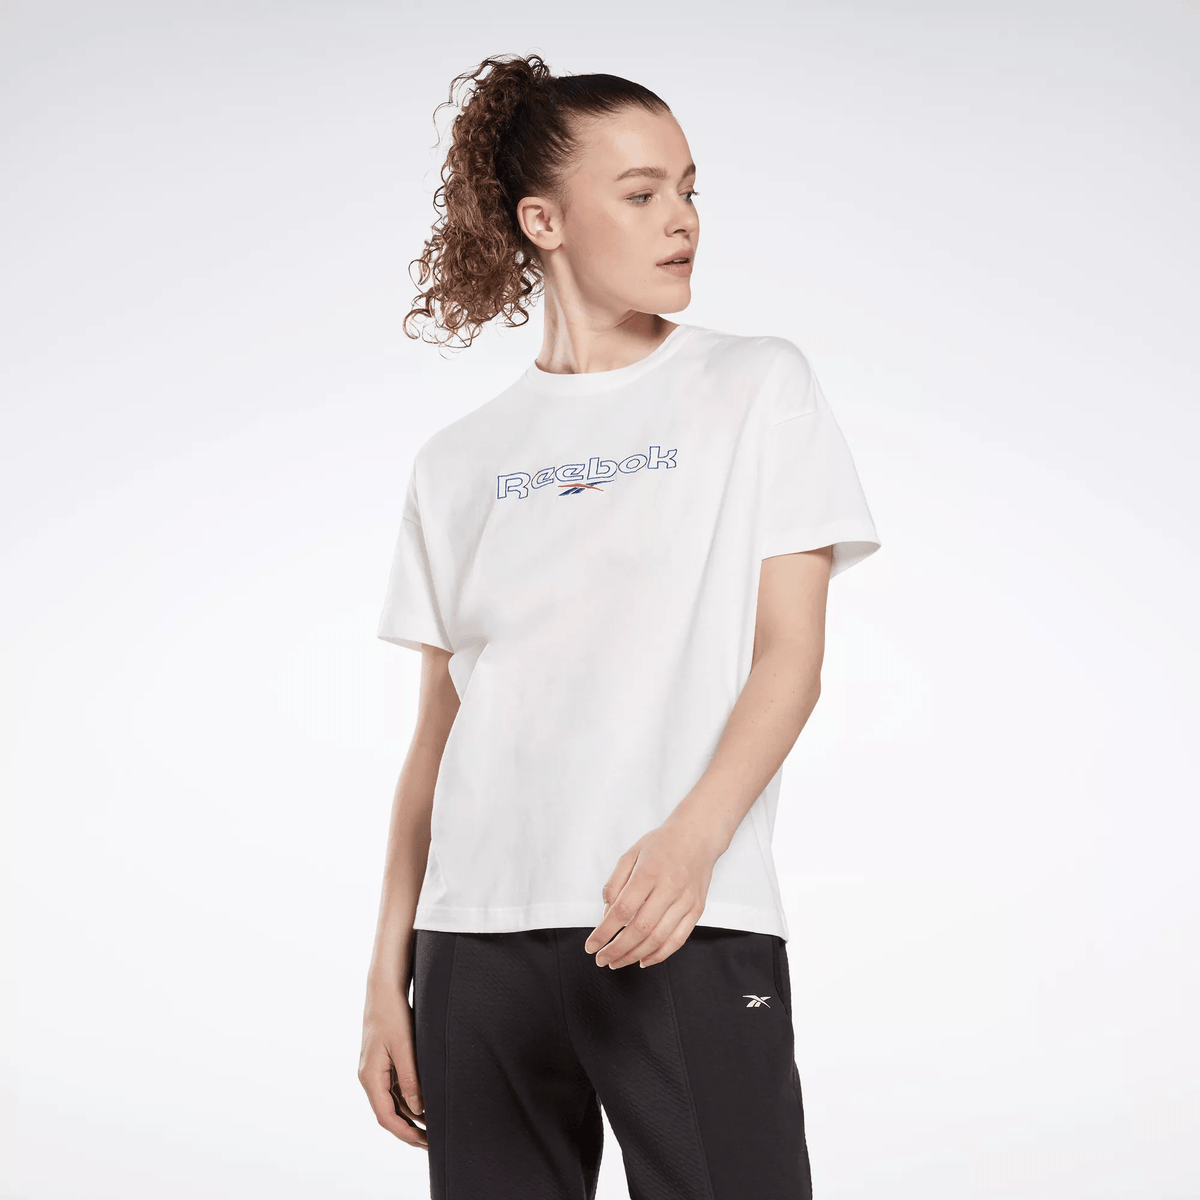 Reebok Women's Brand T-Shirt White